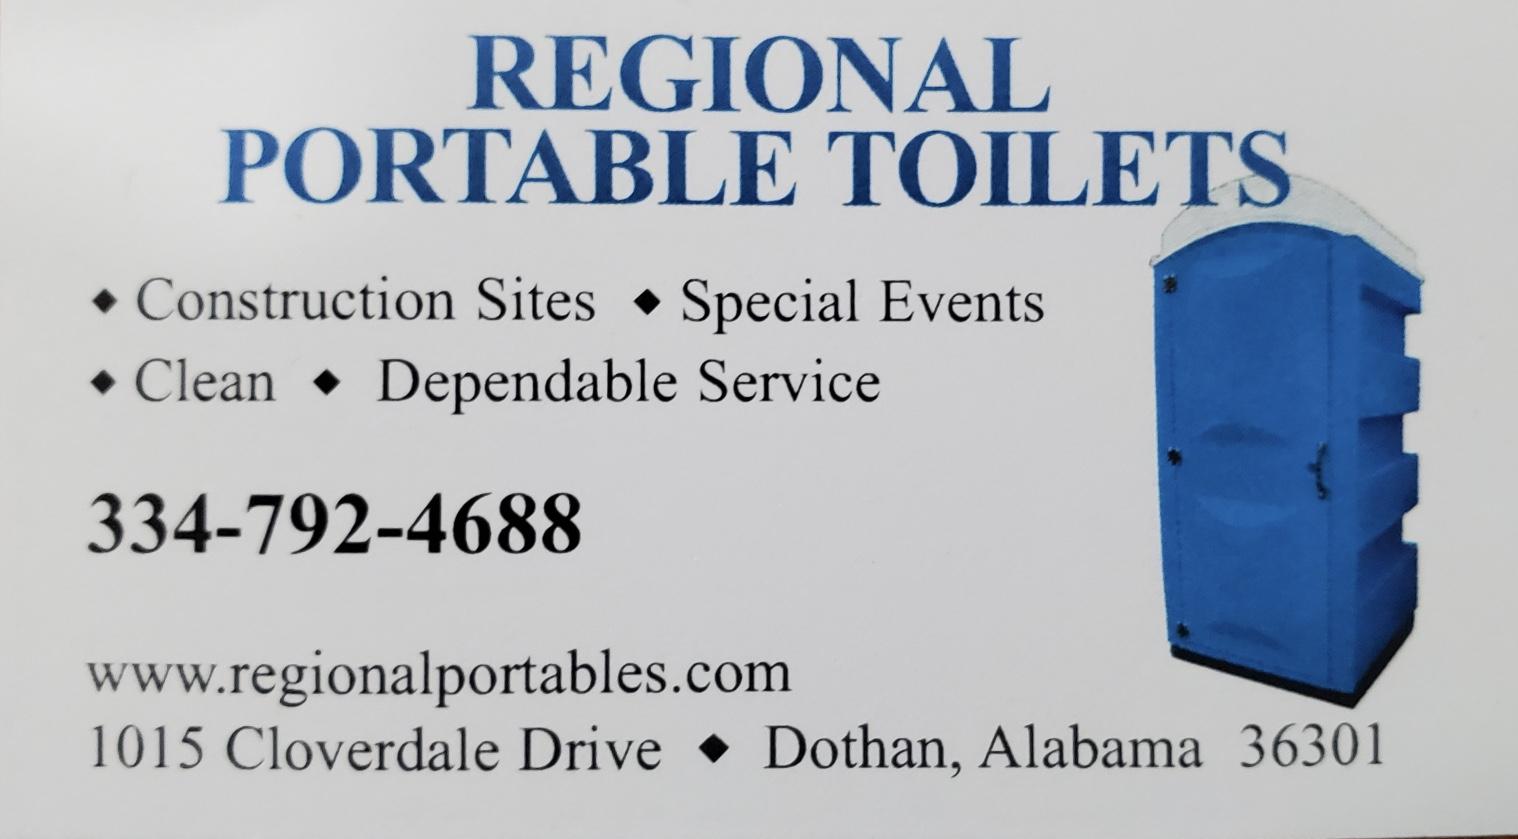 Regional Portable Toilets